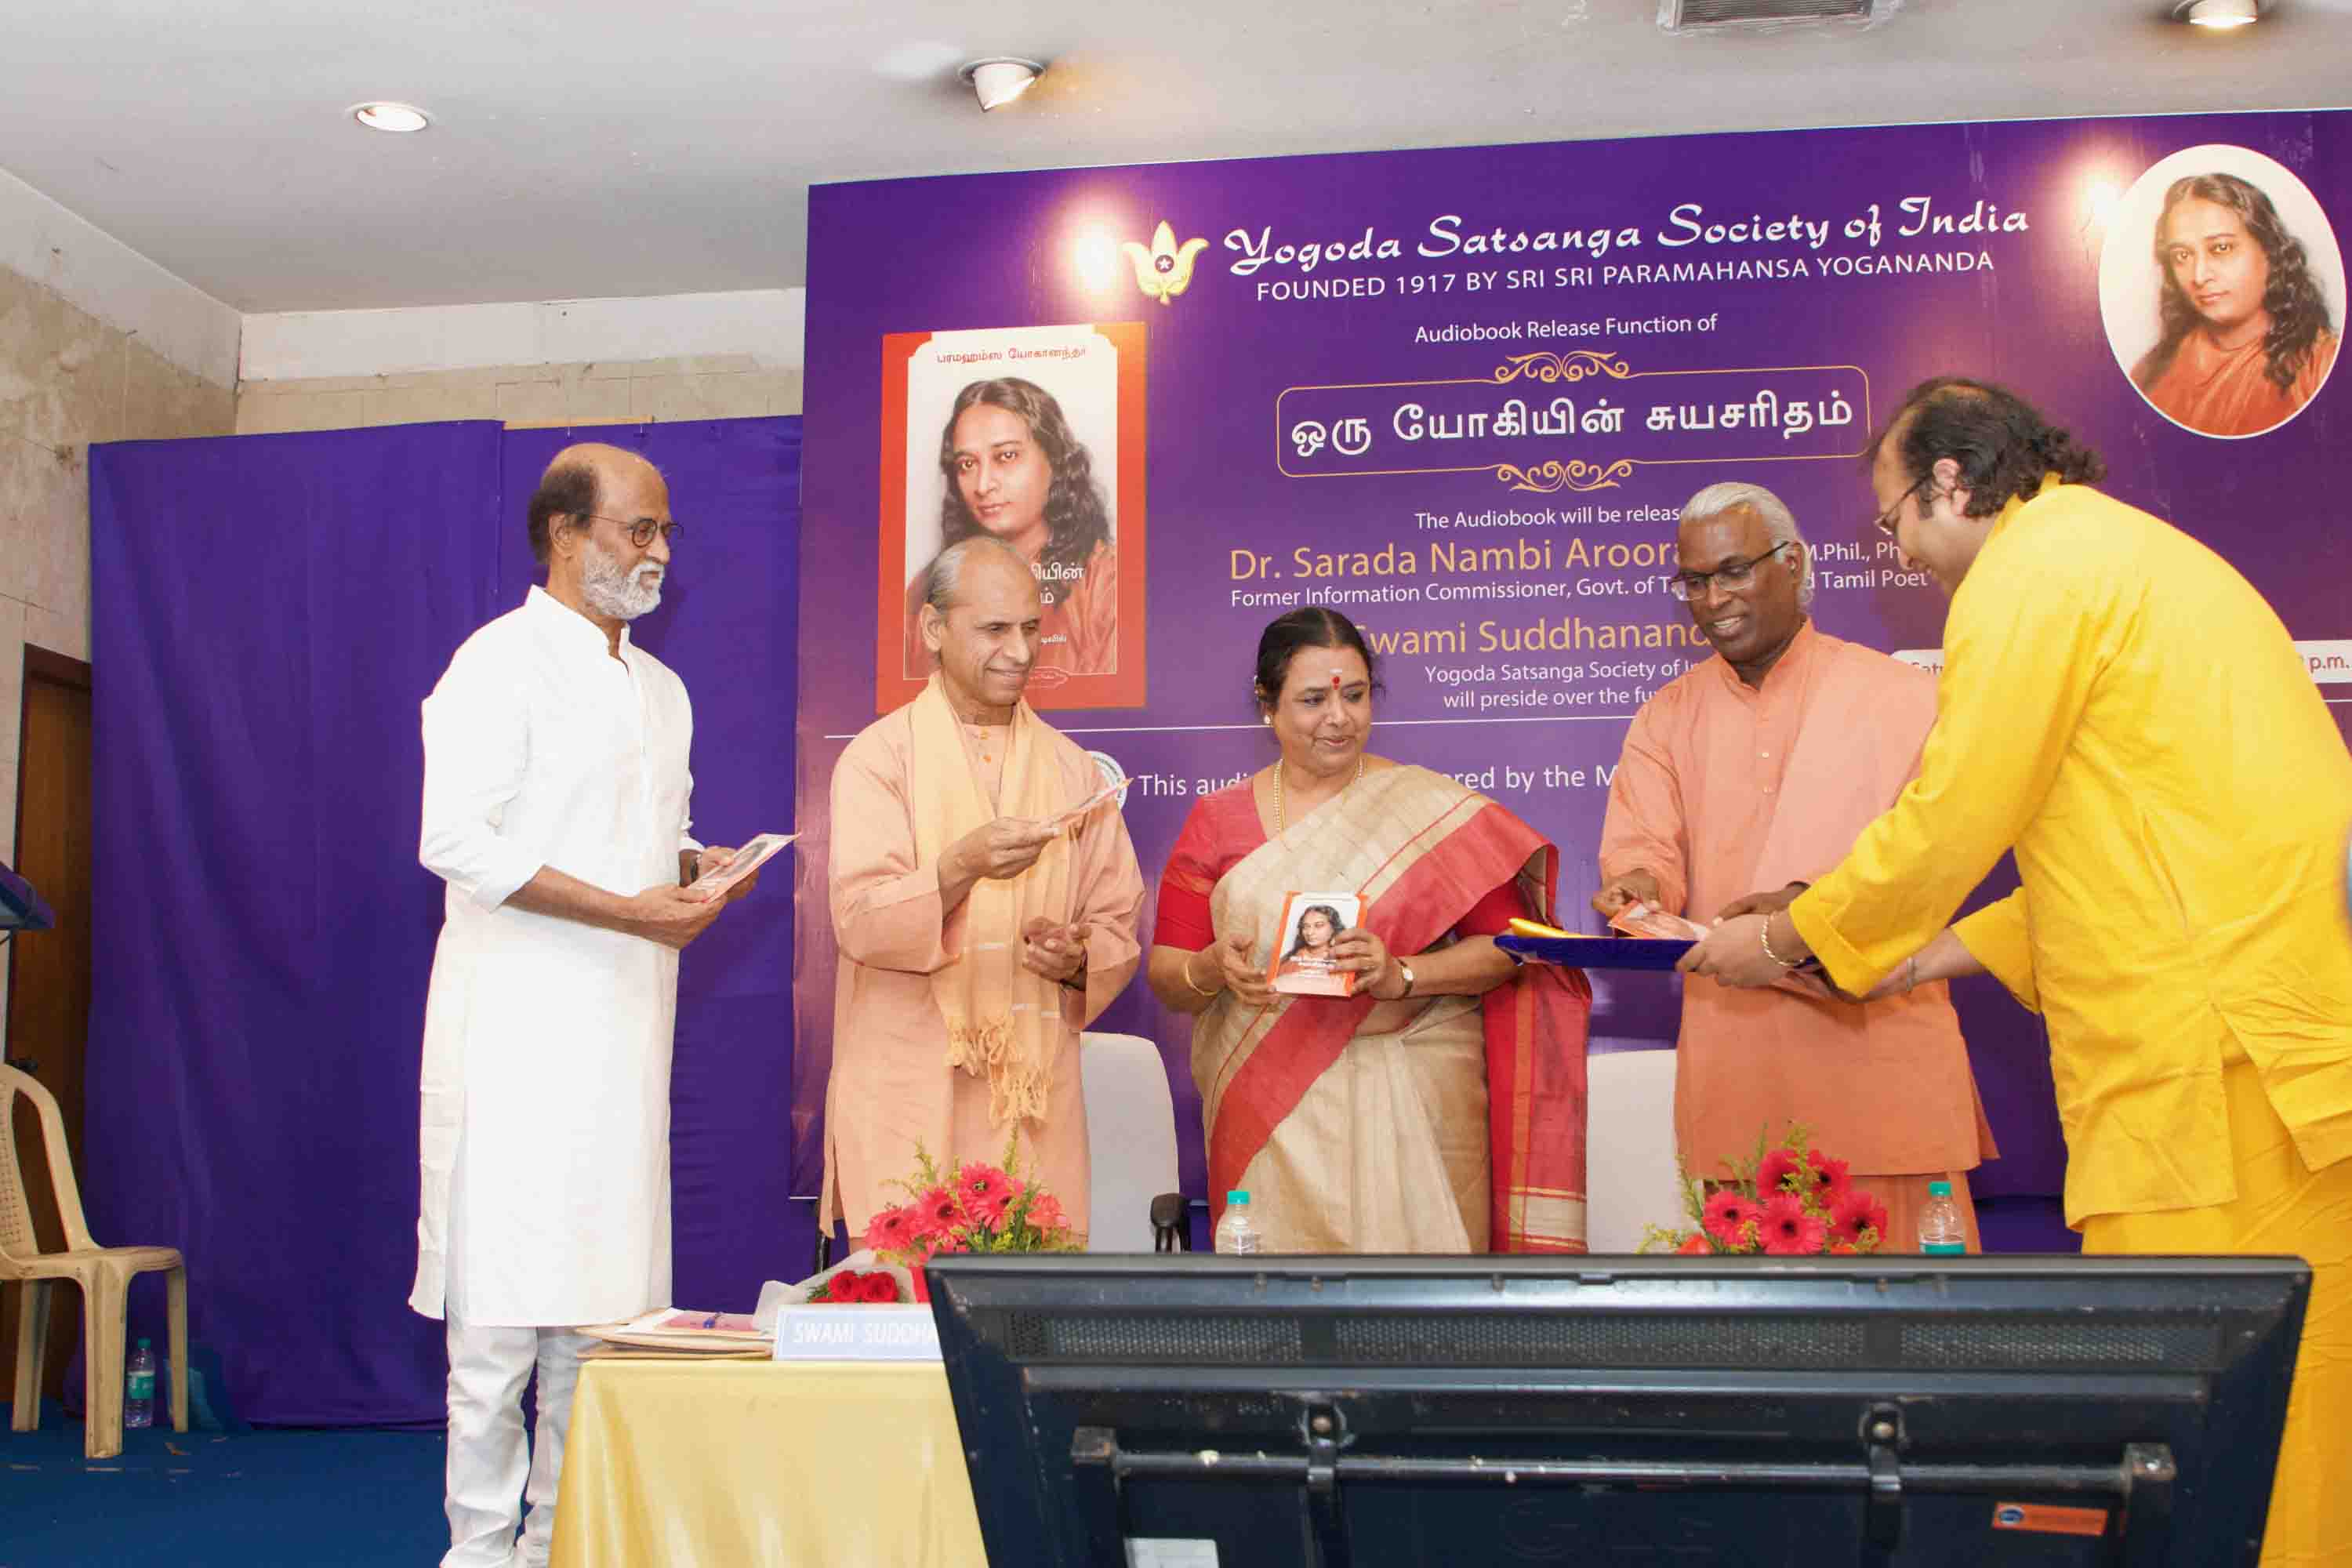 Rajini speech At Autobiography of a Yogi Tamil audio book launch event